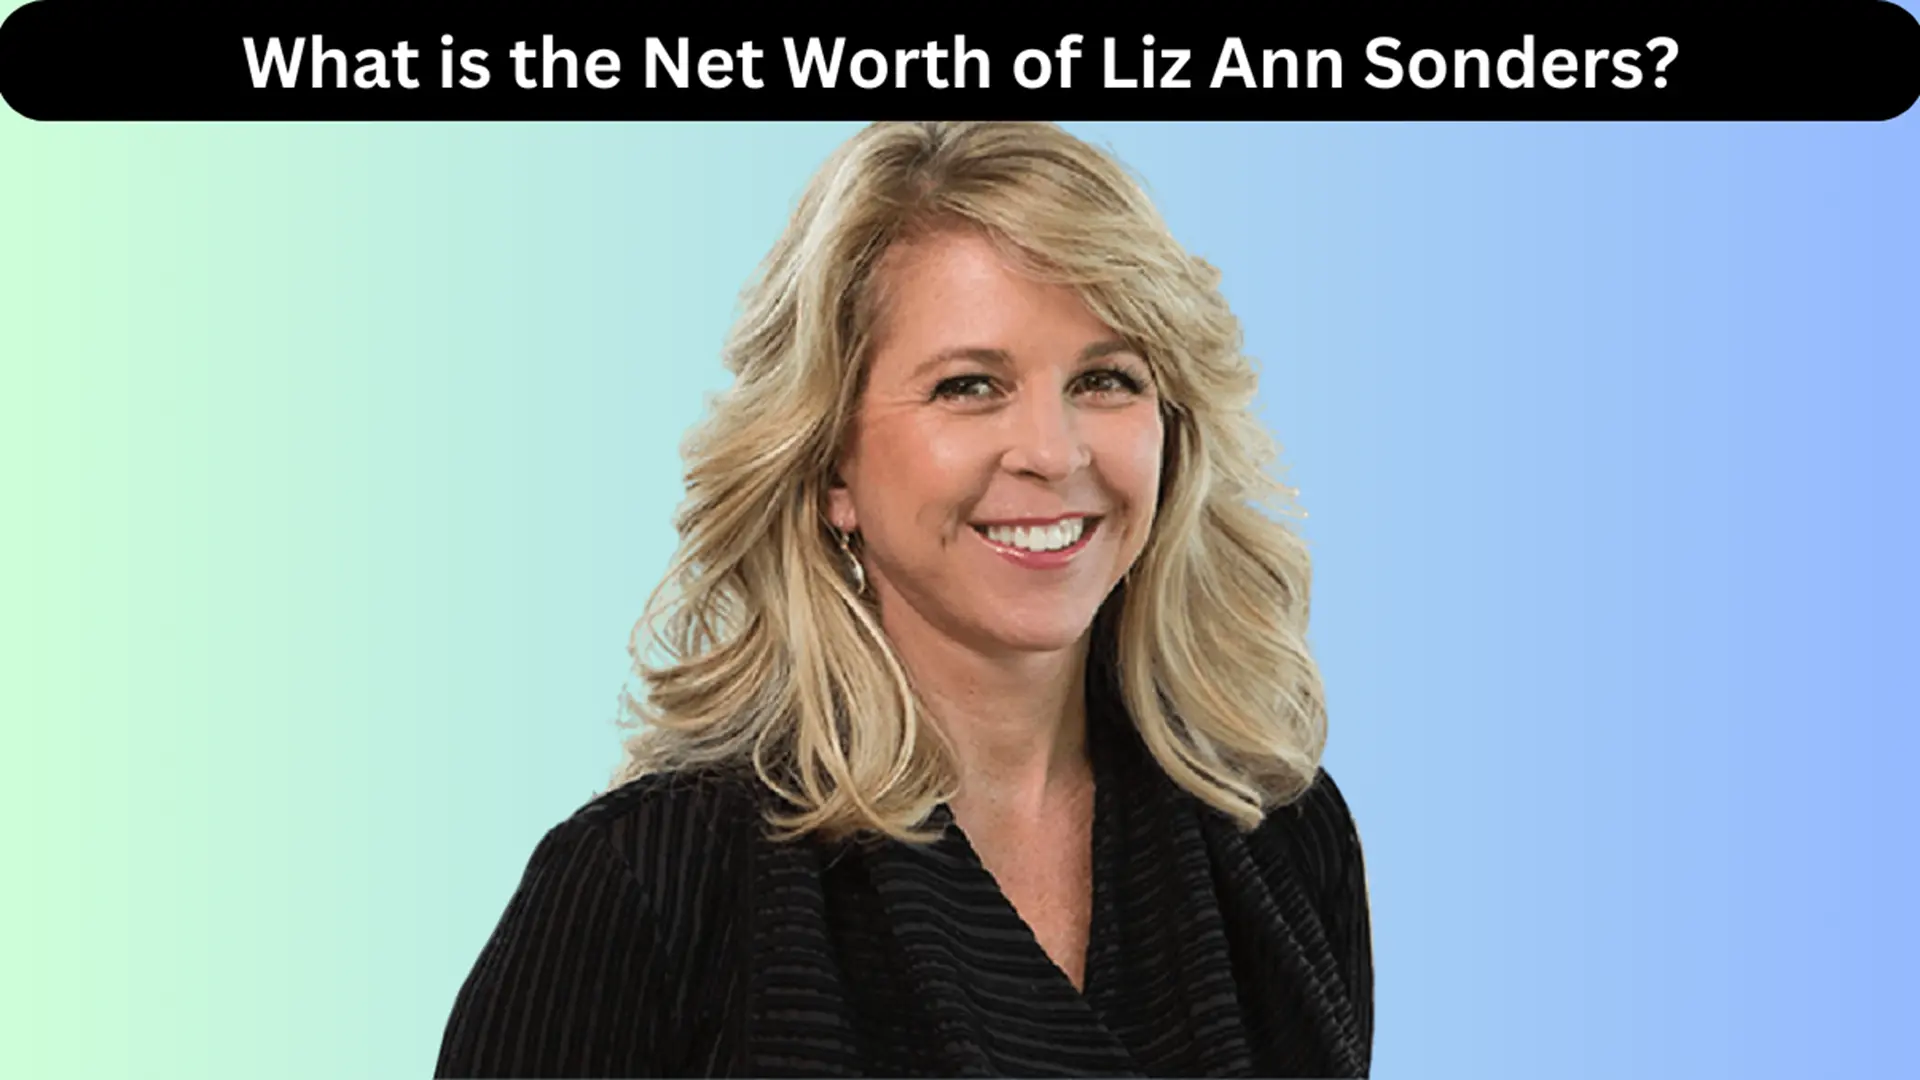 What is the Net Worth of Liz Ann Sonders